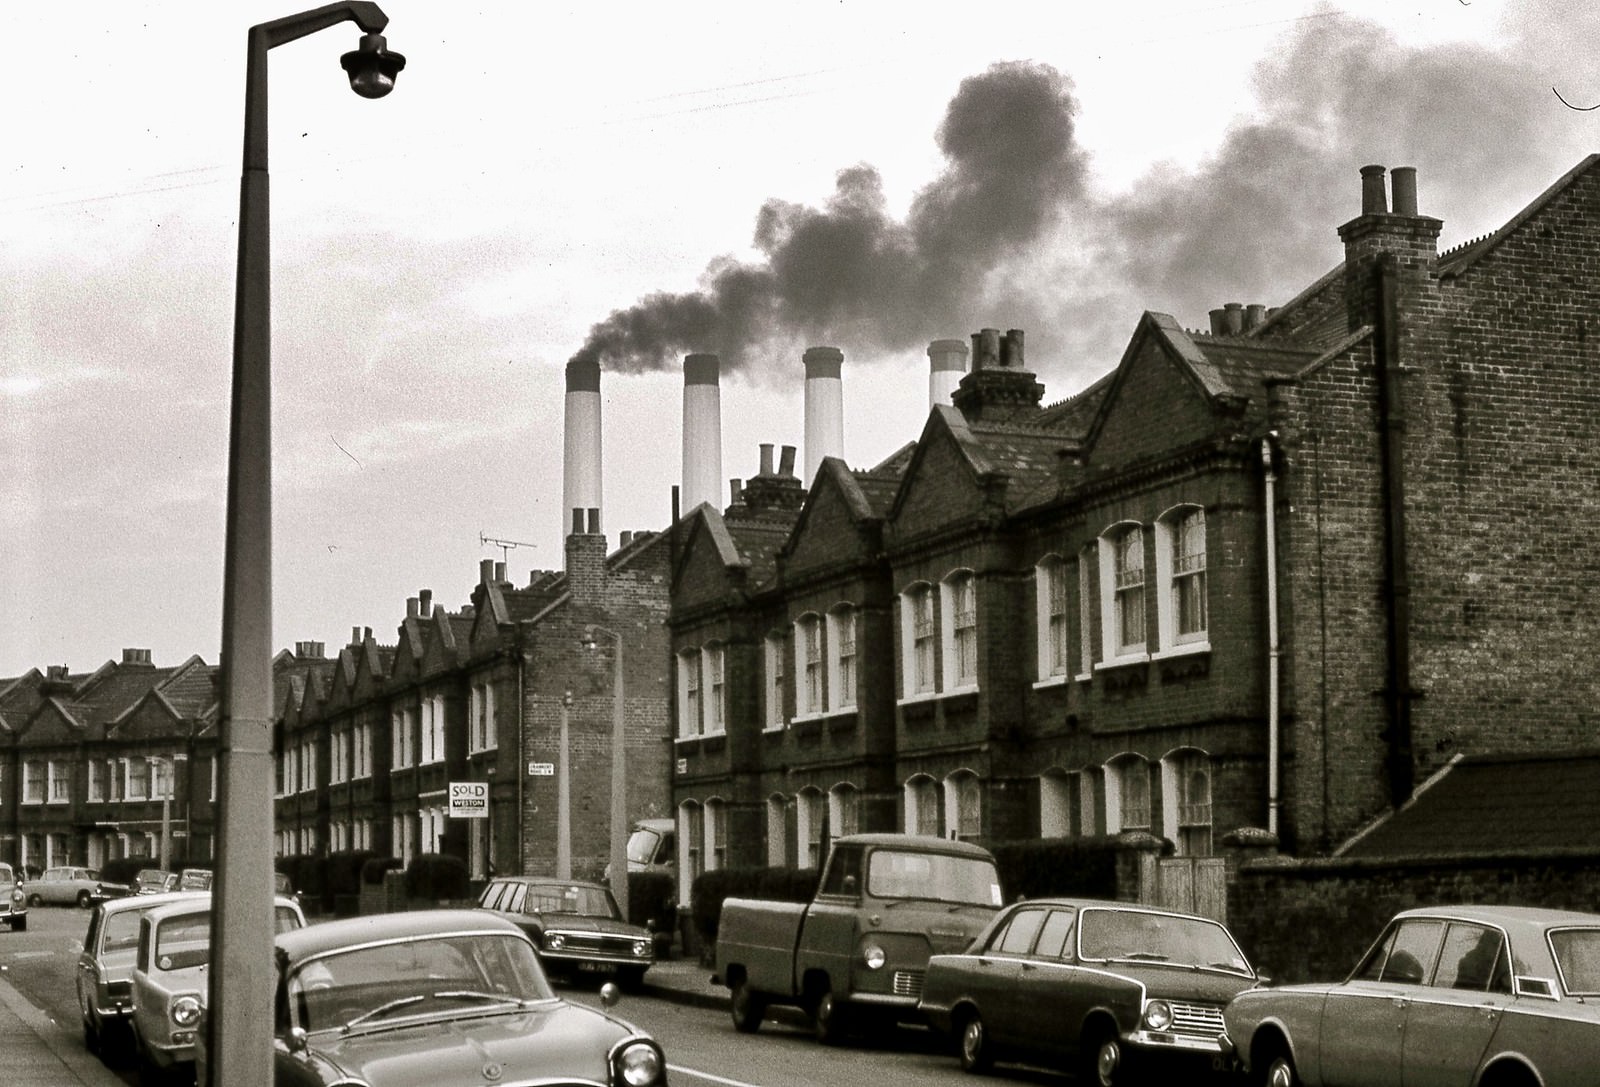 London, February 1971